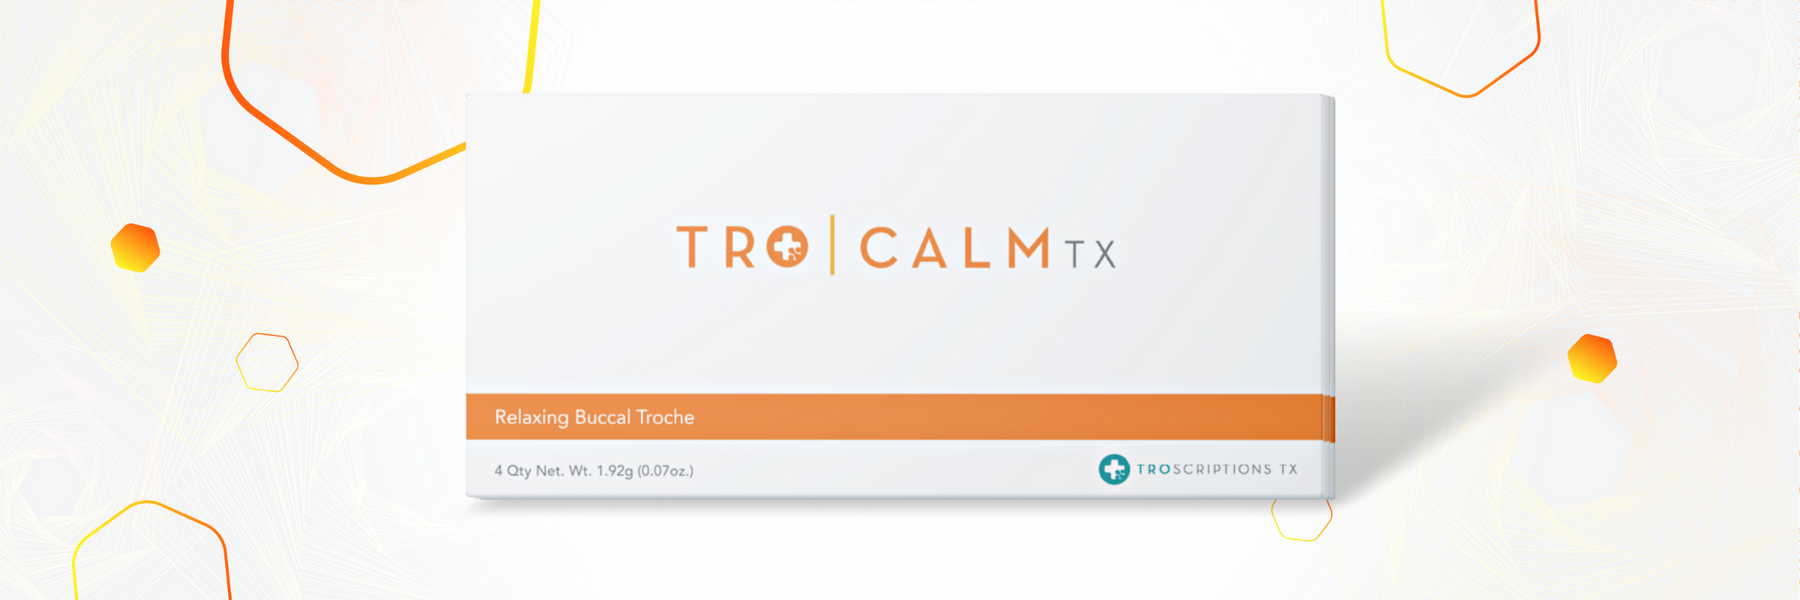 Troscriptions Tro Calm Product Review